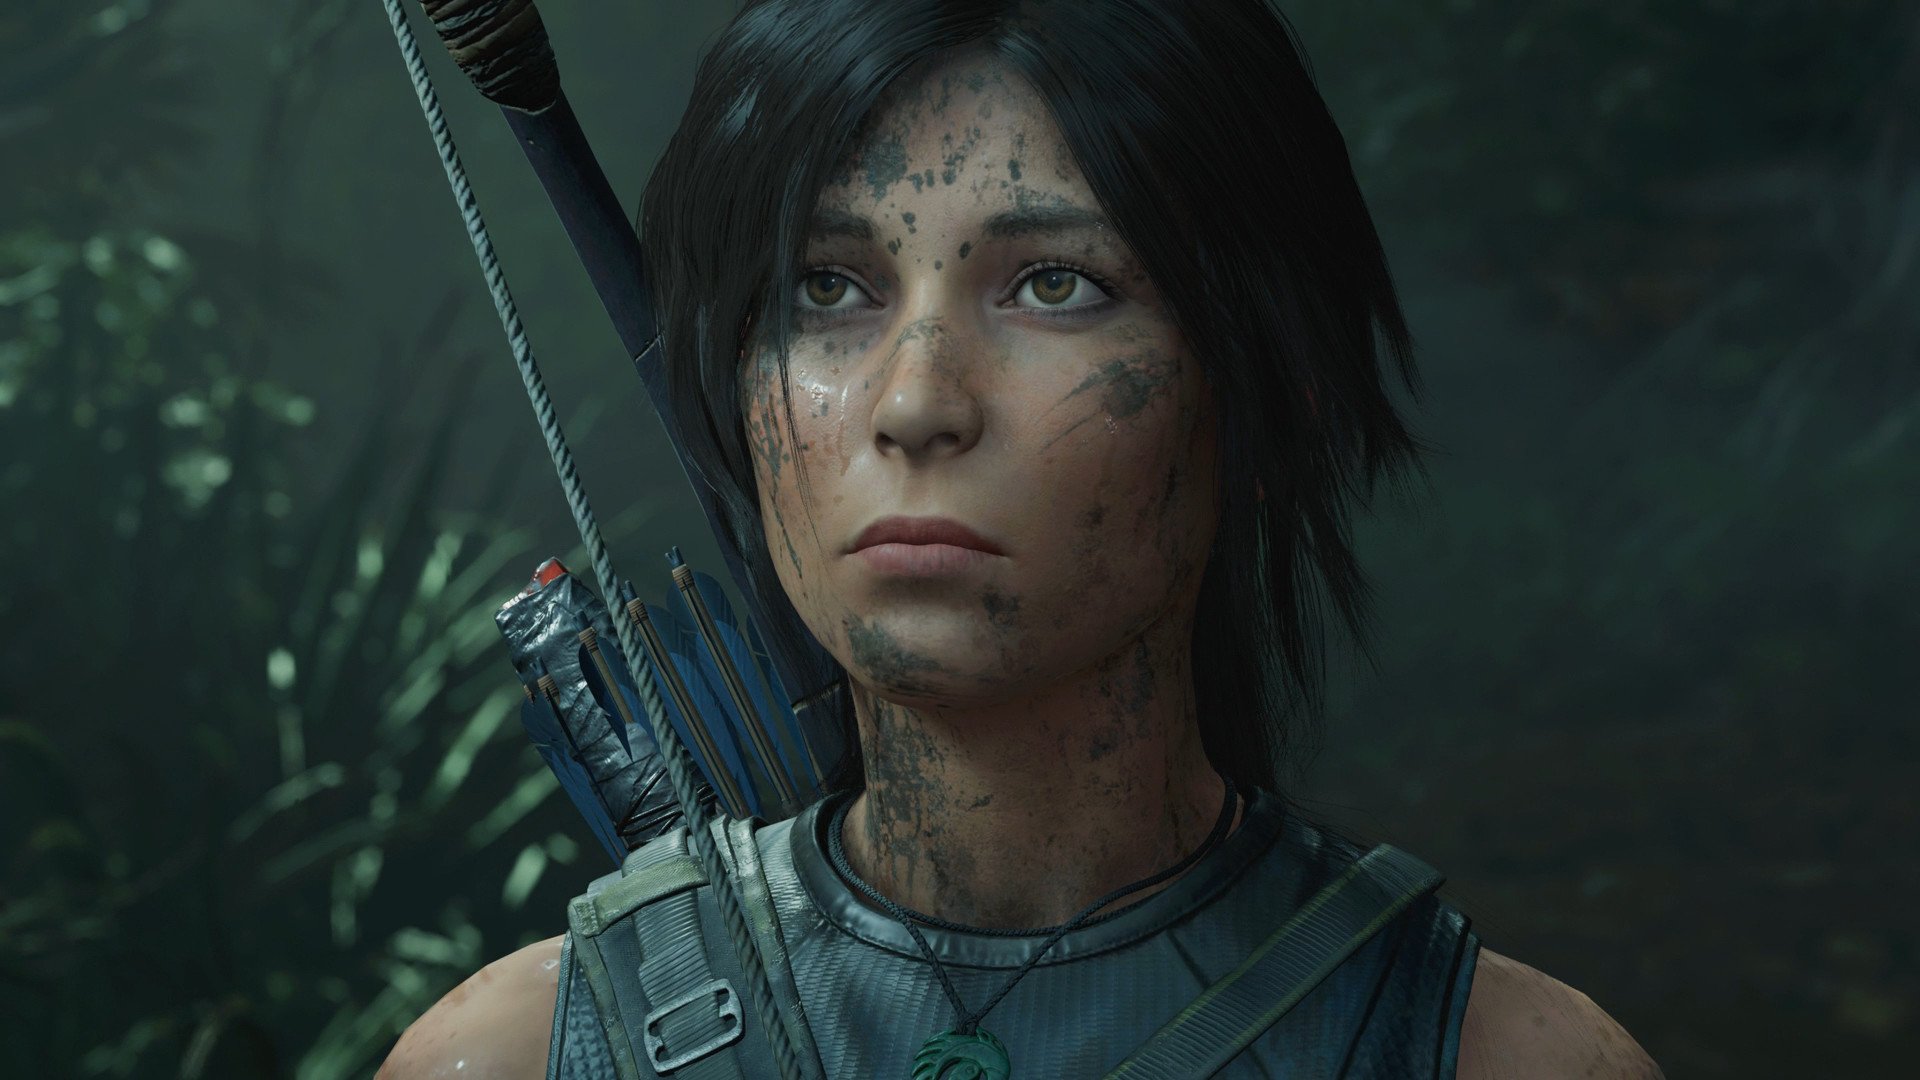 Lara with hours